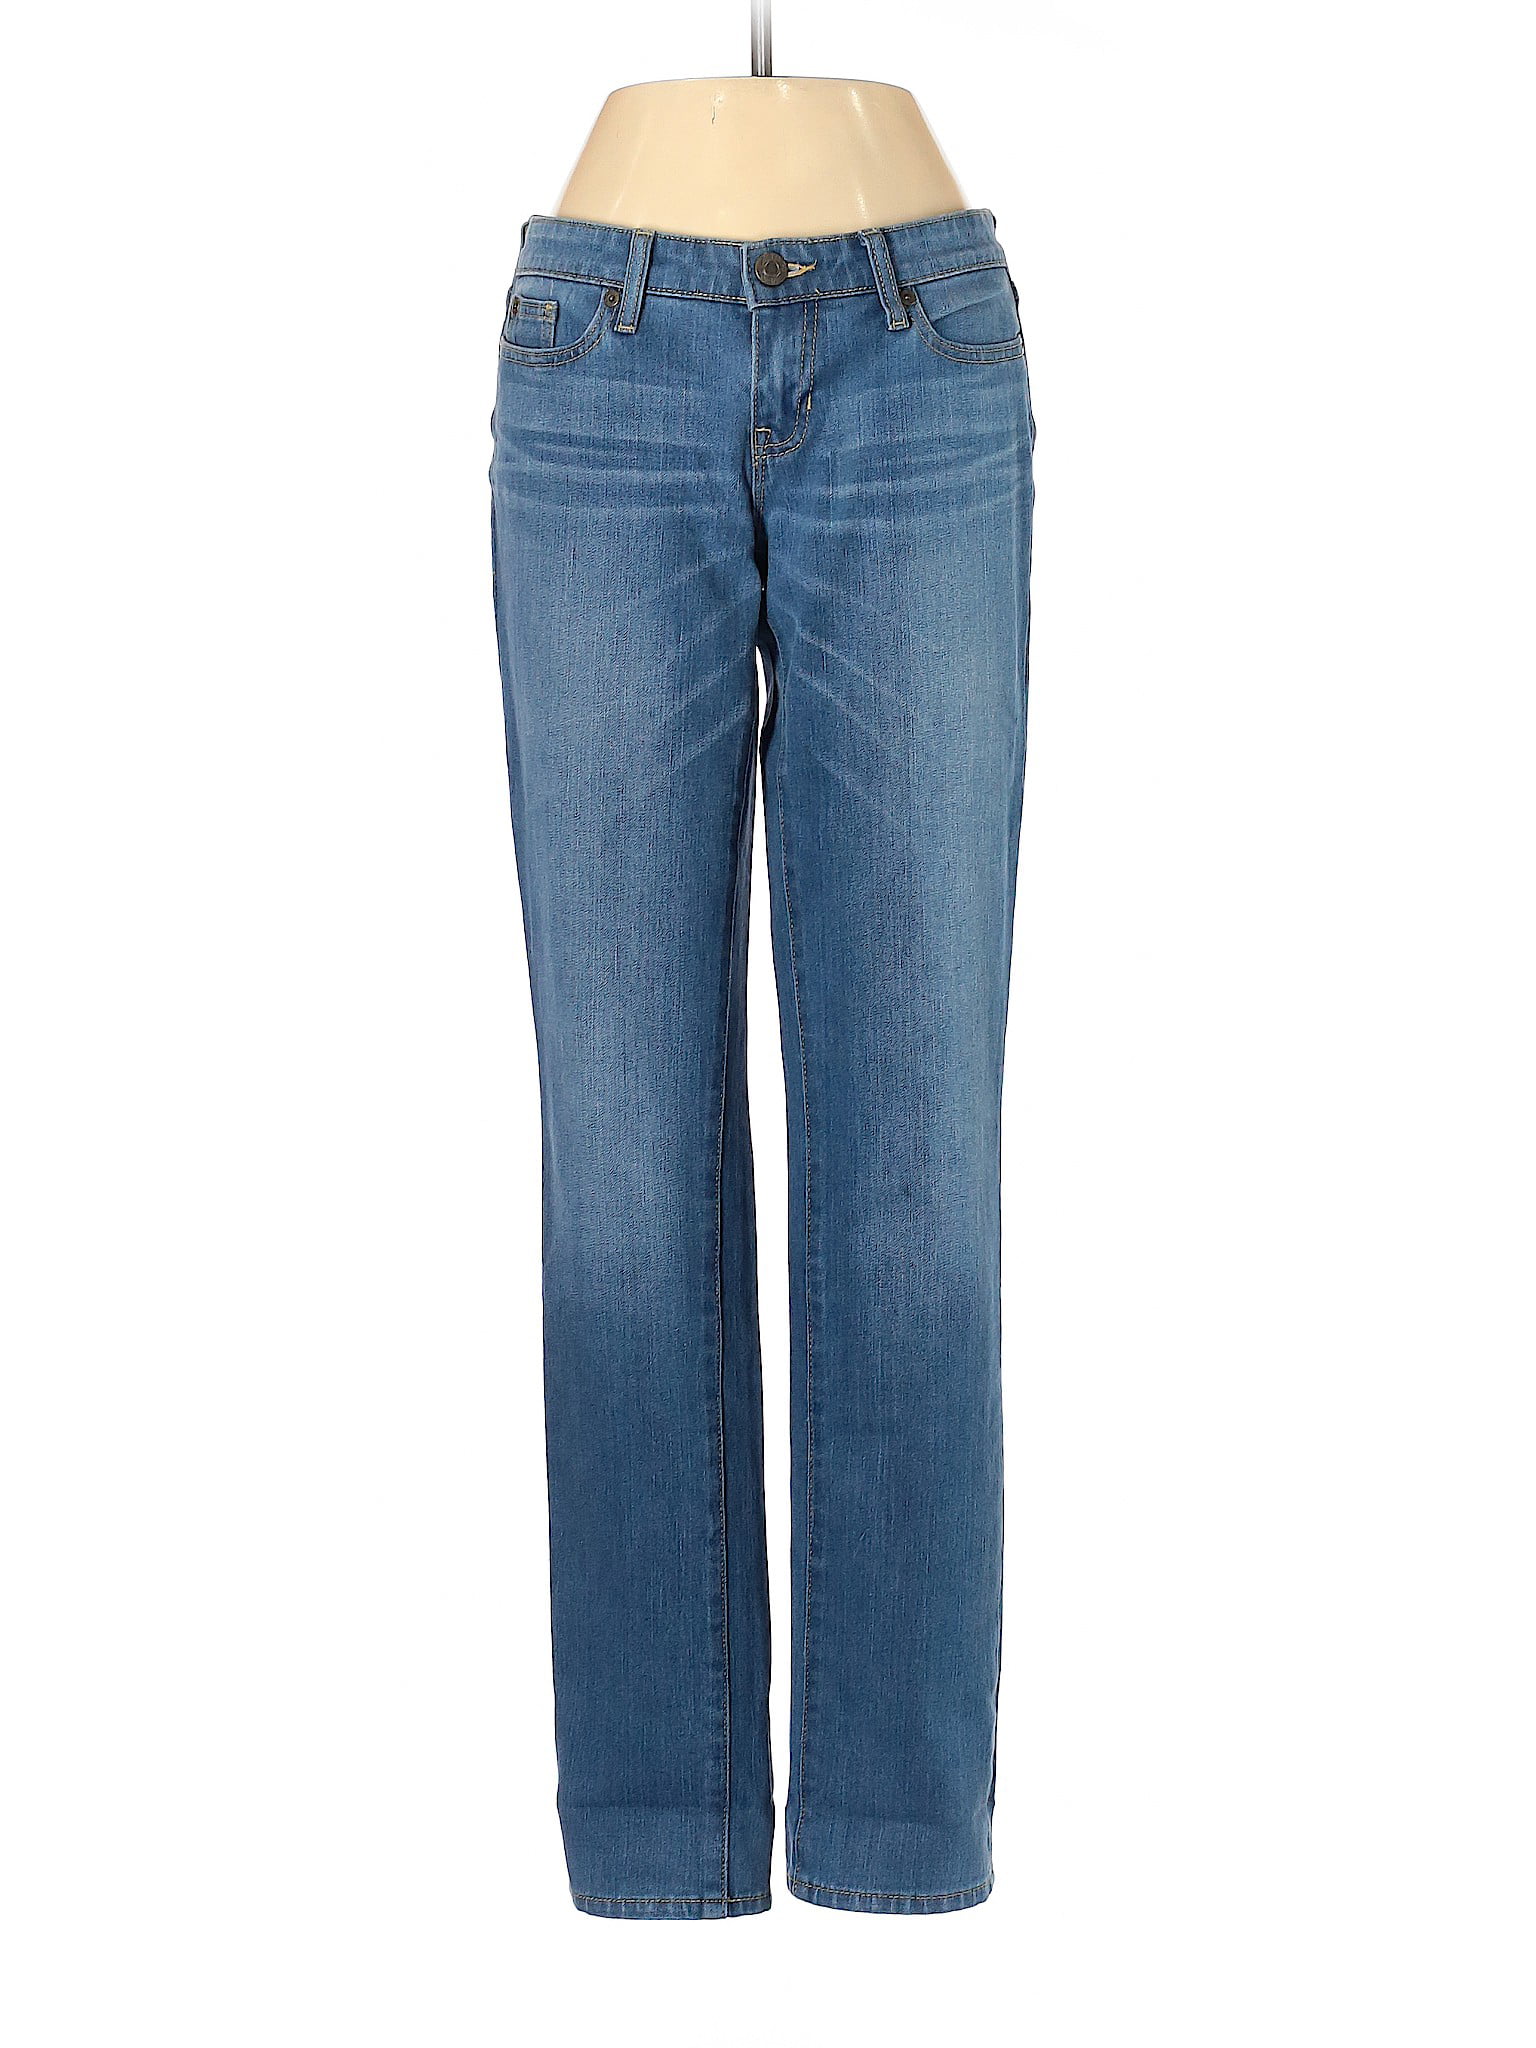 Gap Outlet - Pre-Owned Gap Outlet Women's Size 4 Jeans - Walmart.com ...